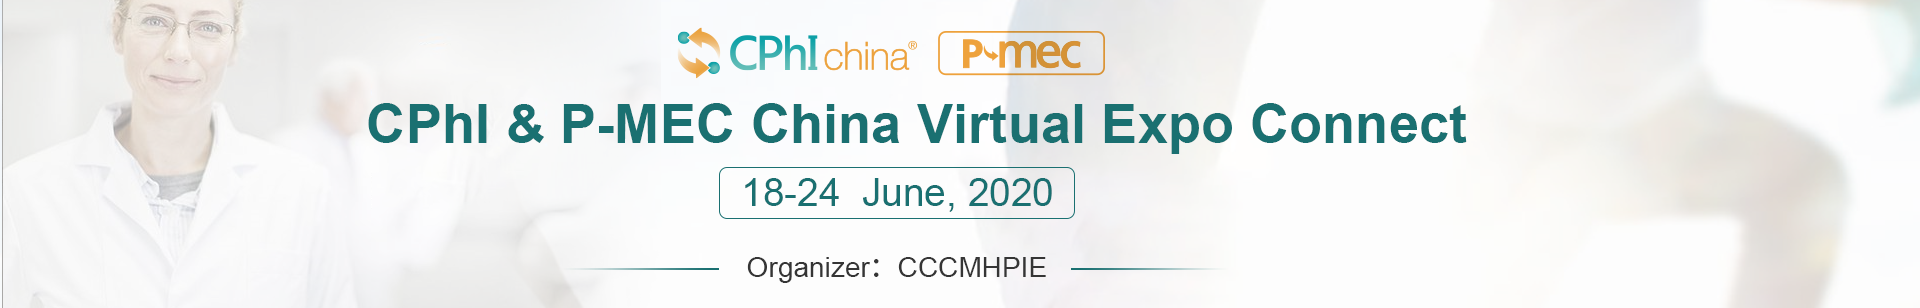 CPhI & P-MEC China Virtual Expo Connect